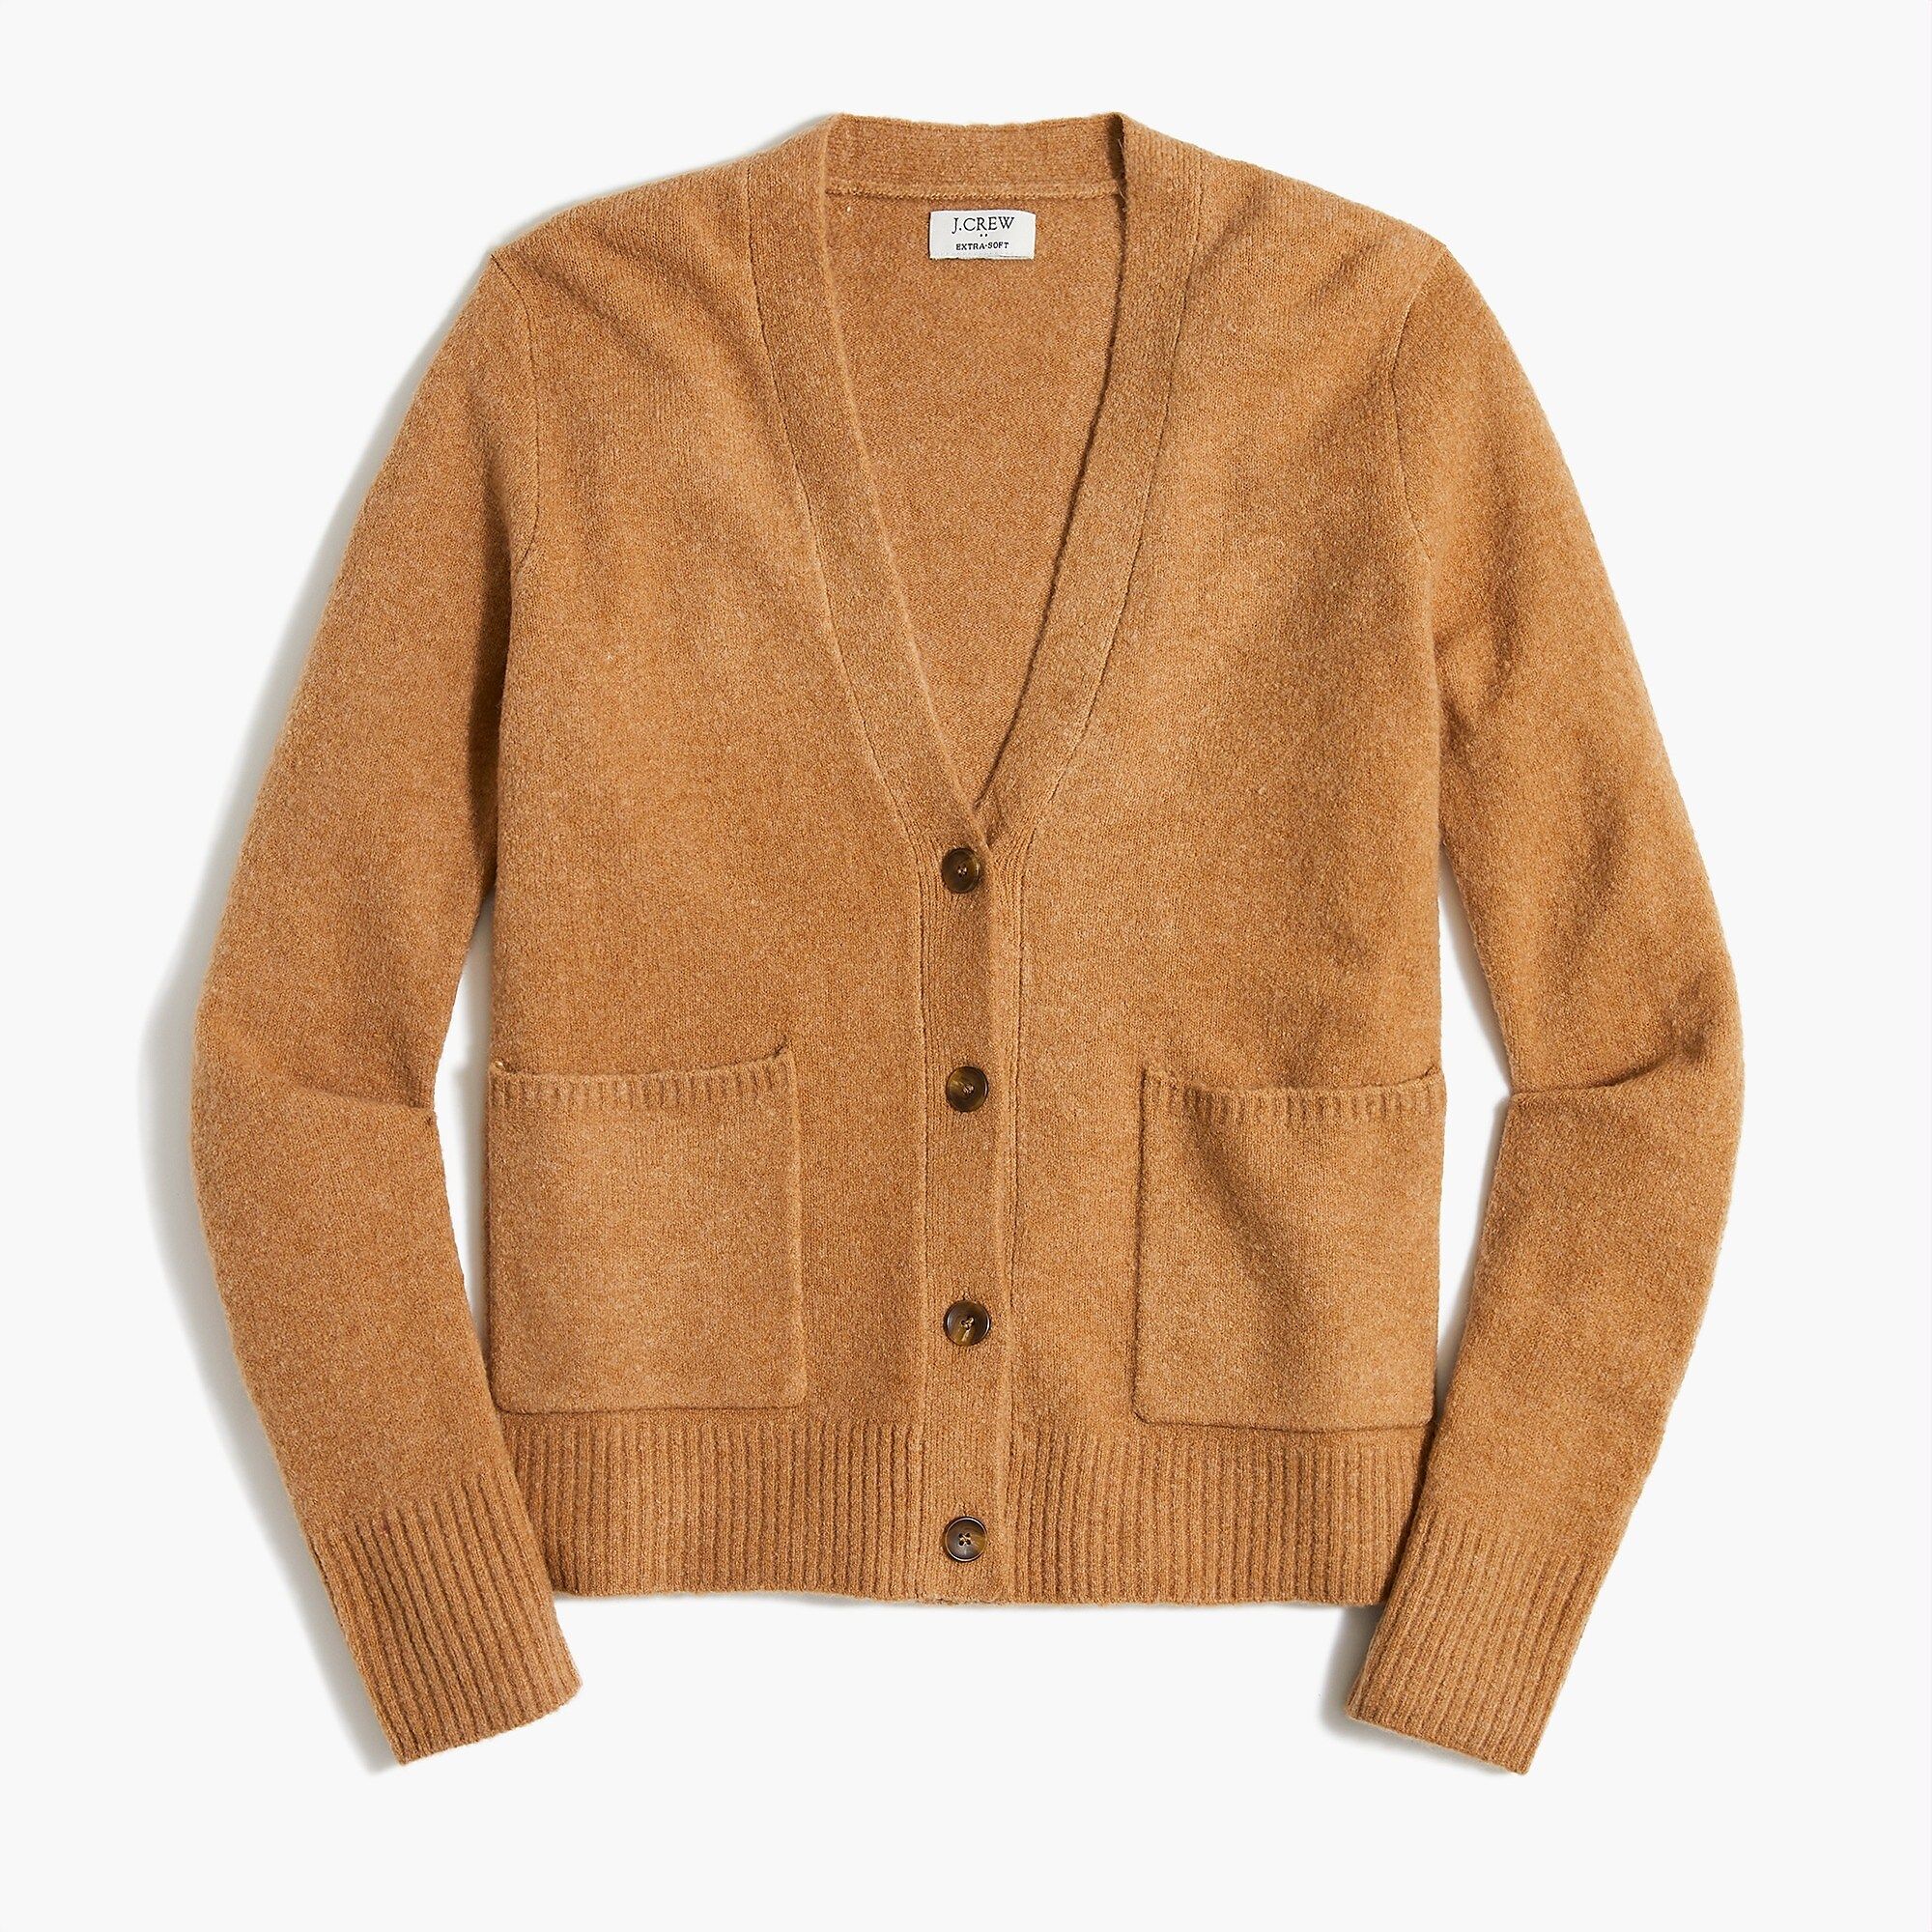 V-neck cardigan sweater in extra-soft yarn | J.Crew Factory